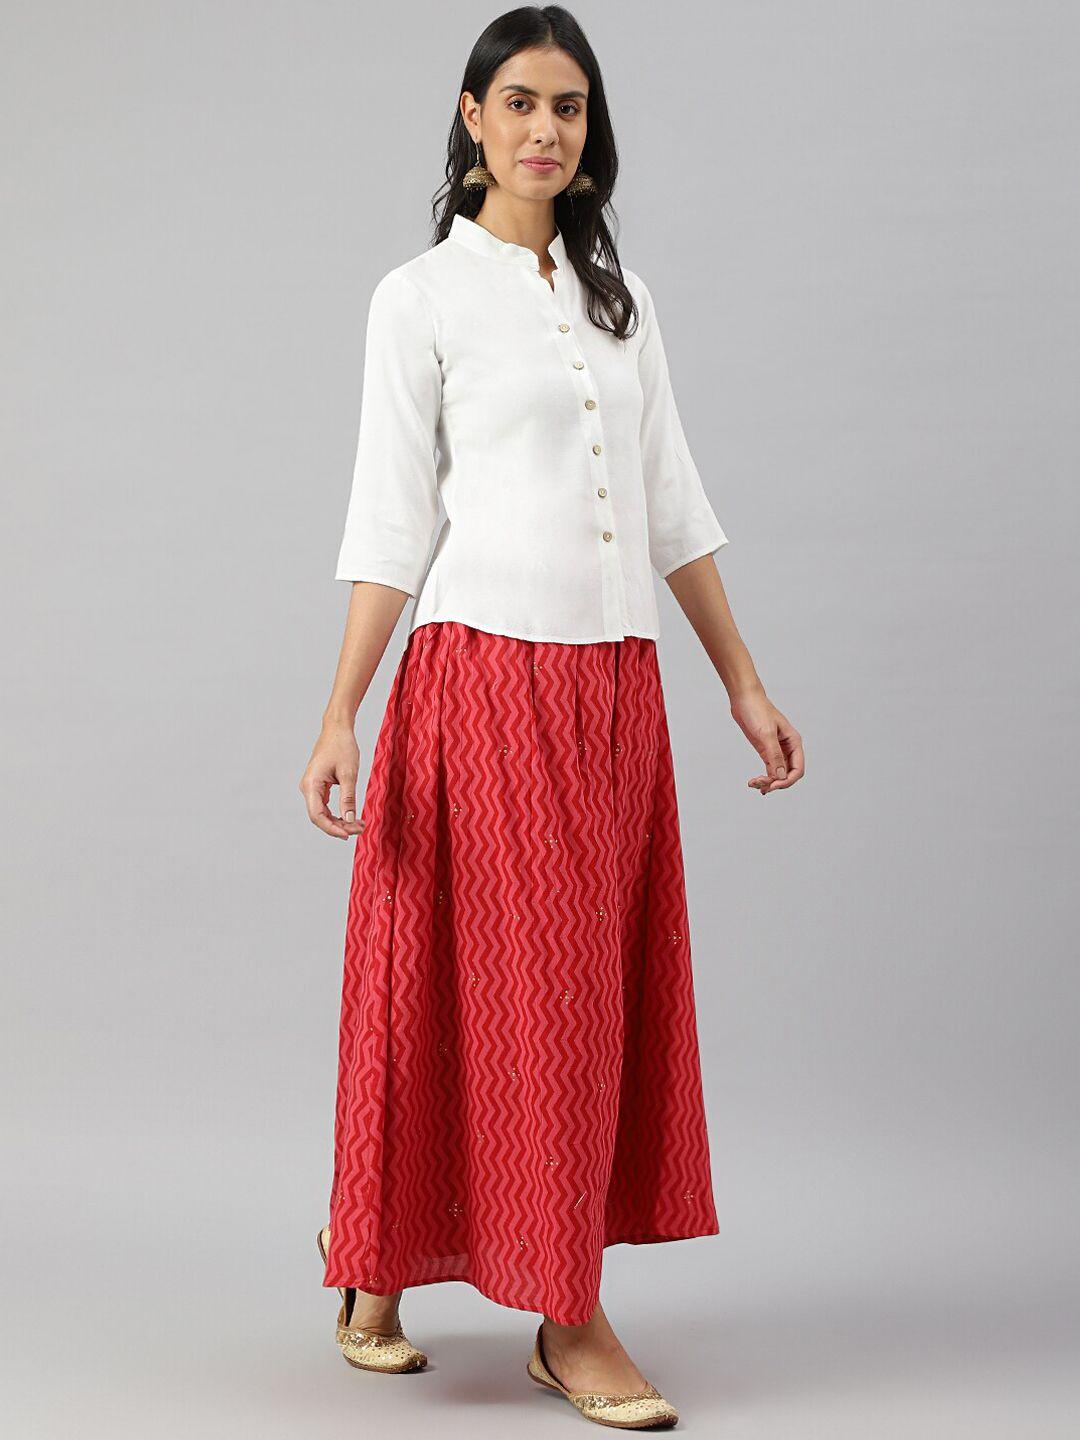 metro-fashion chevron printed shirt with pleated flared skirt